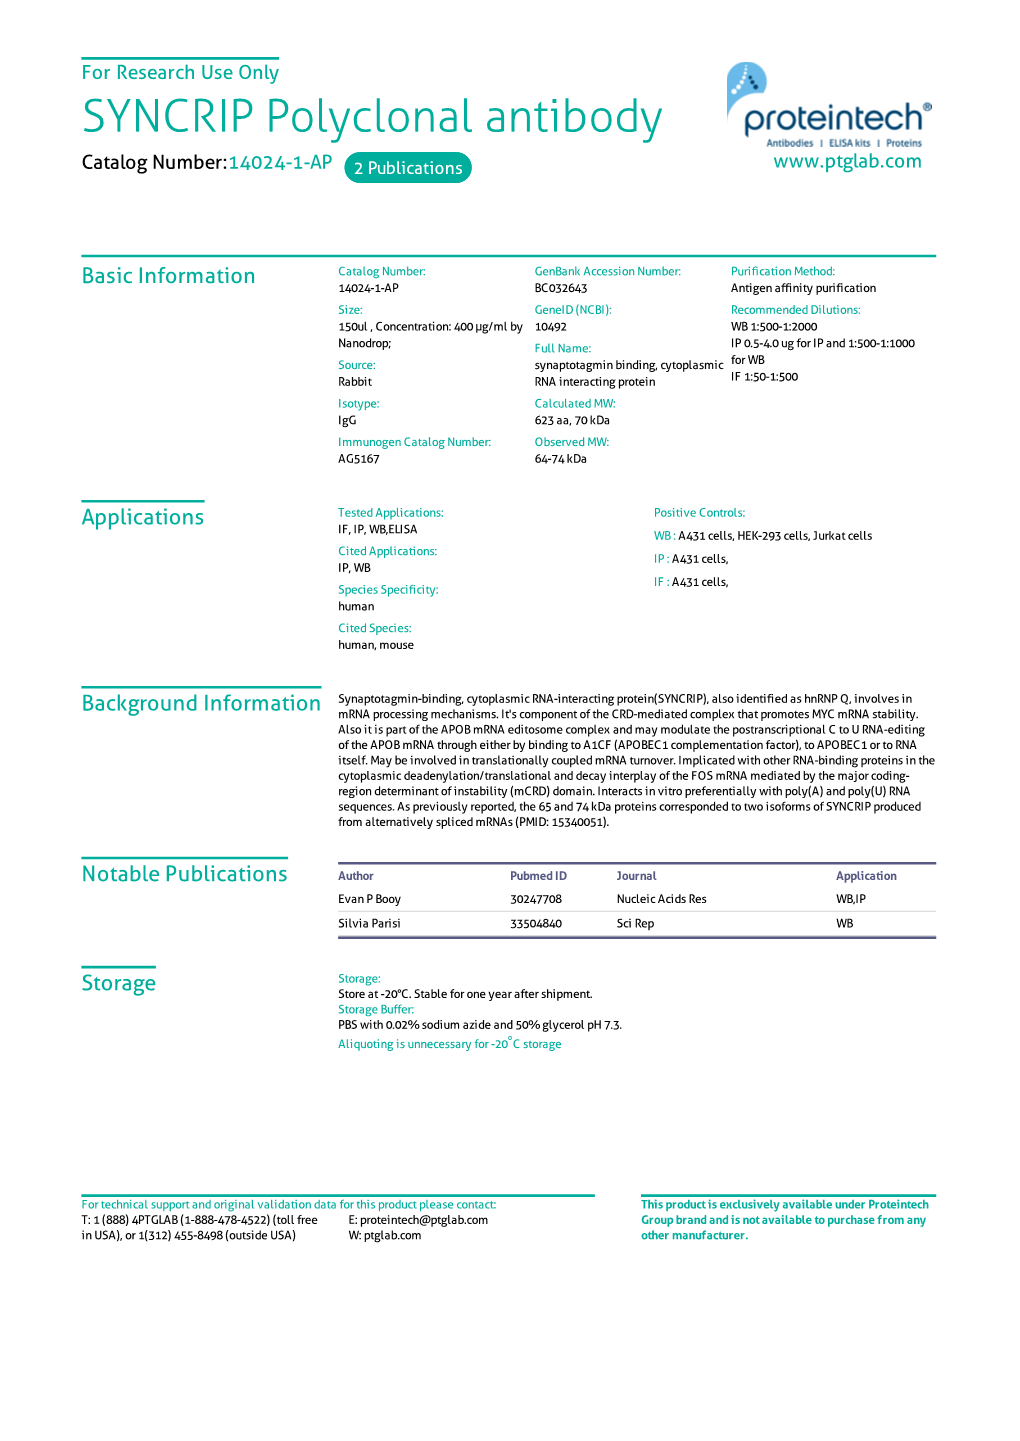 SYNCRIP Polyclonal Antibody Catalog Number:14024-1-AP 2 Publications